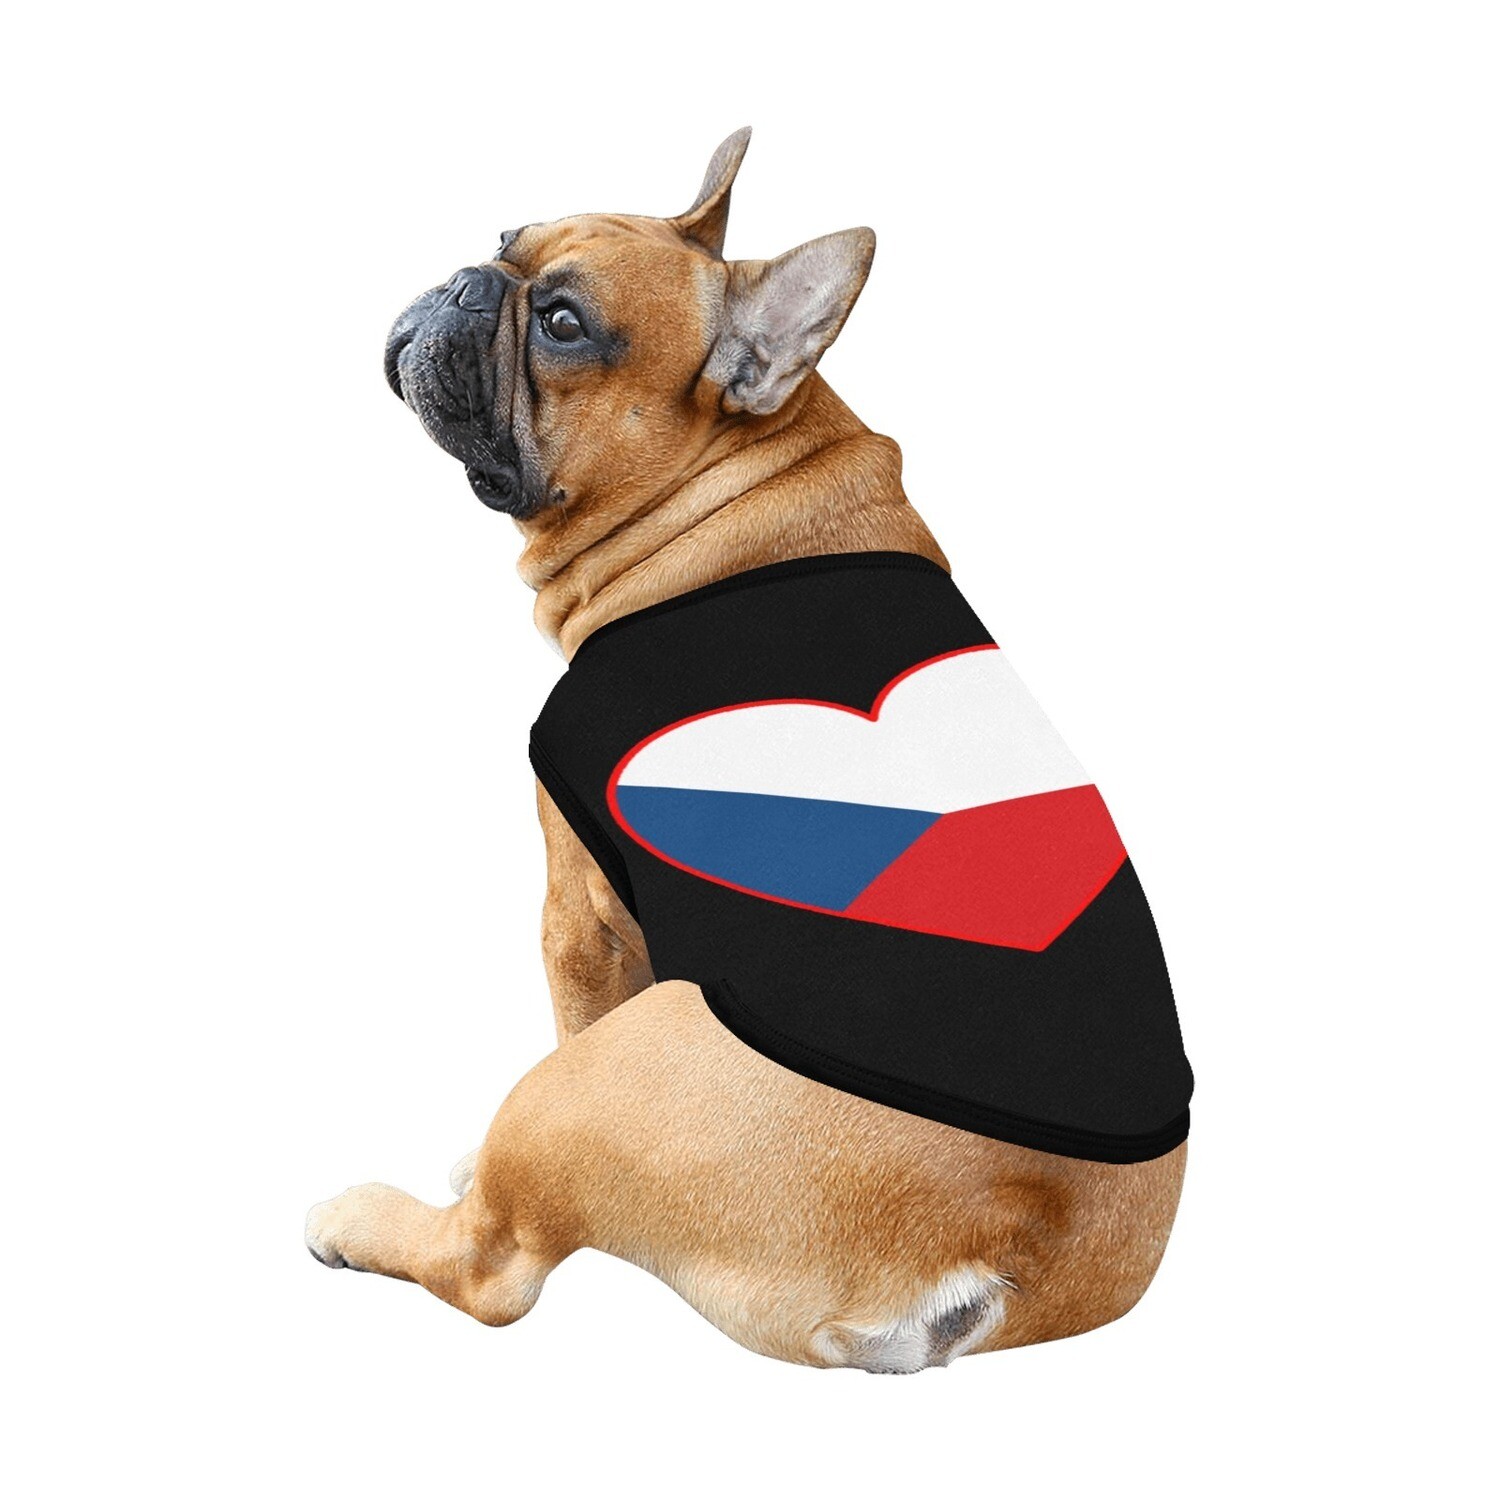 🐕🇨🇿I love Czech Republic, Czech flag, dog t-shirt, dog gift, dog tank top, dog shirt, dog clothes, gift, 7 sizes XS to 3XL, heart shape, black